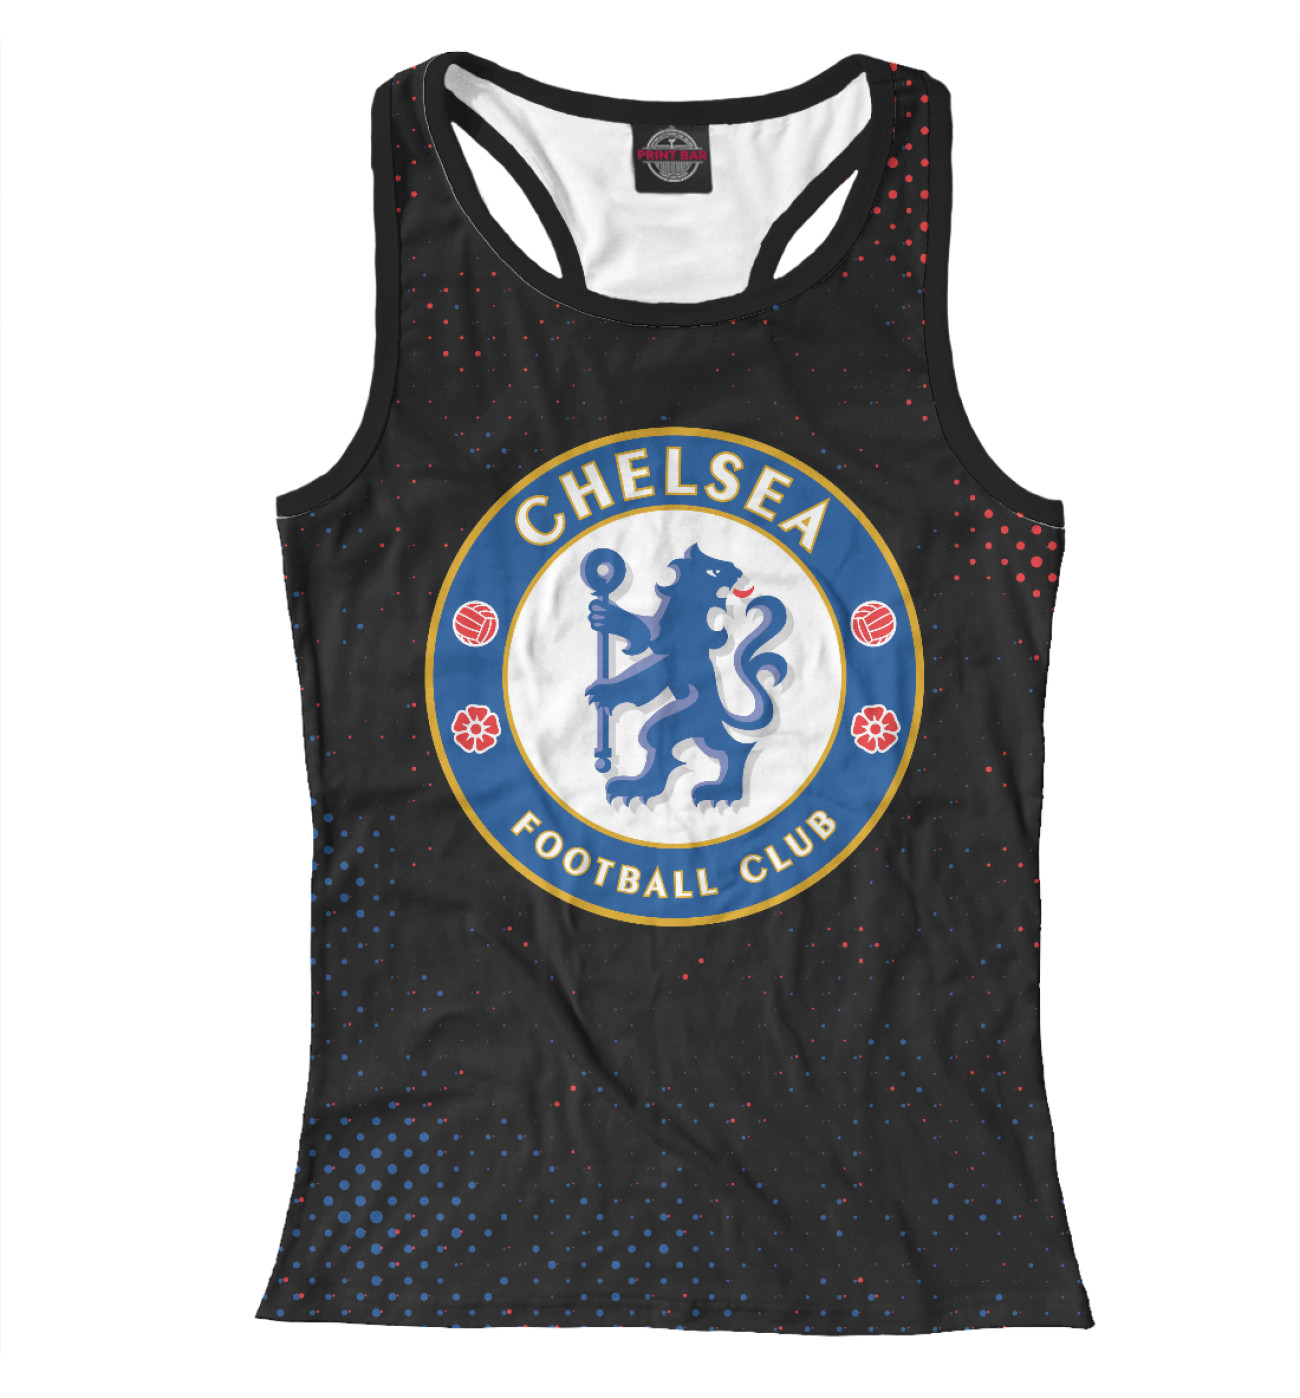 Женская Борцовка Chelsea F.C. / Челси, артикул: CHL-602836-mayb-1